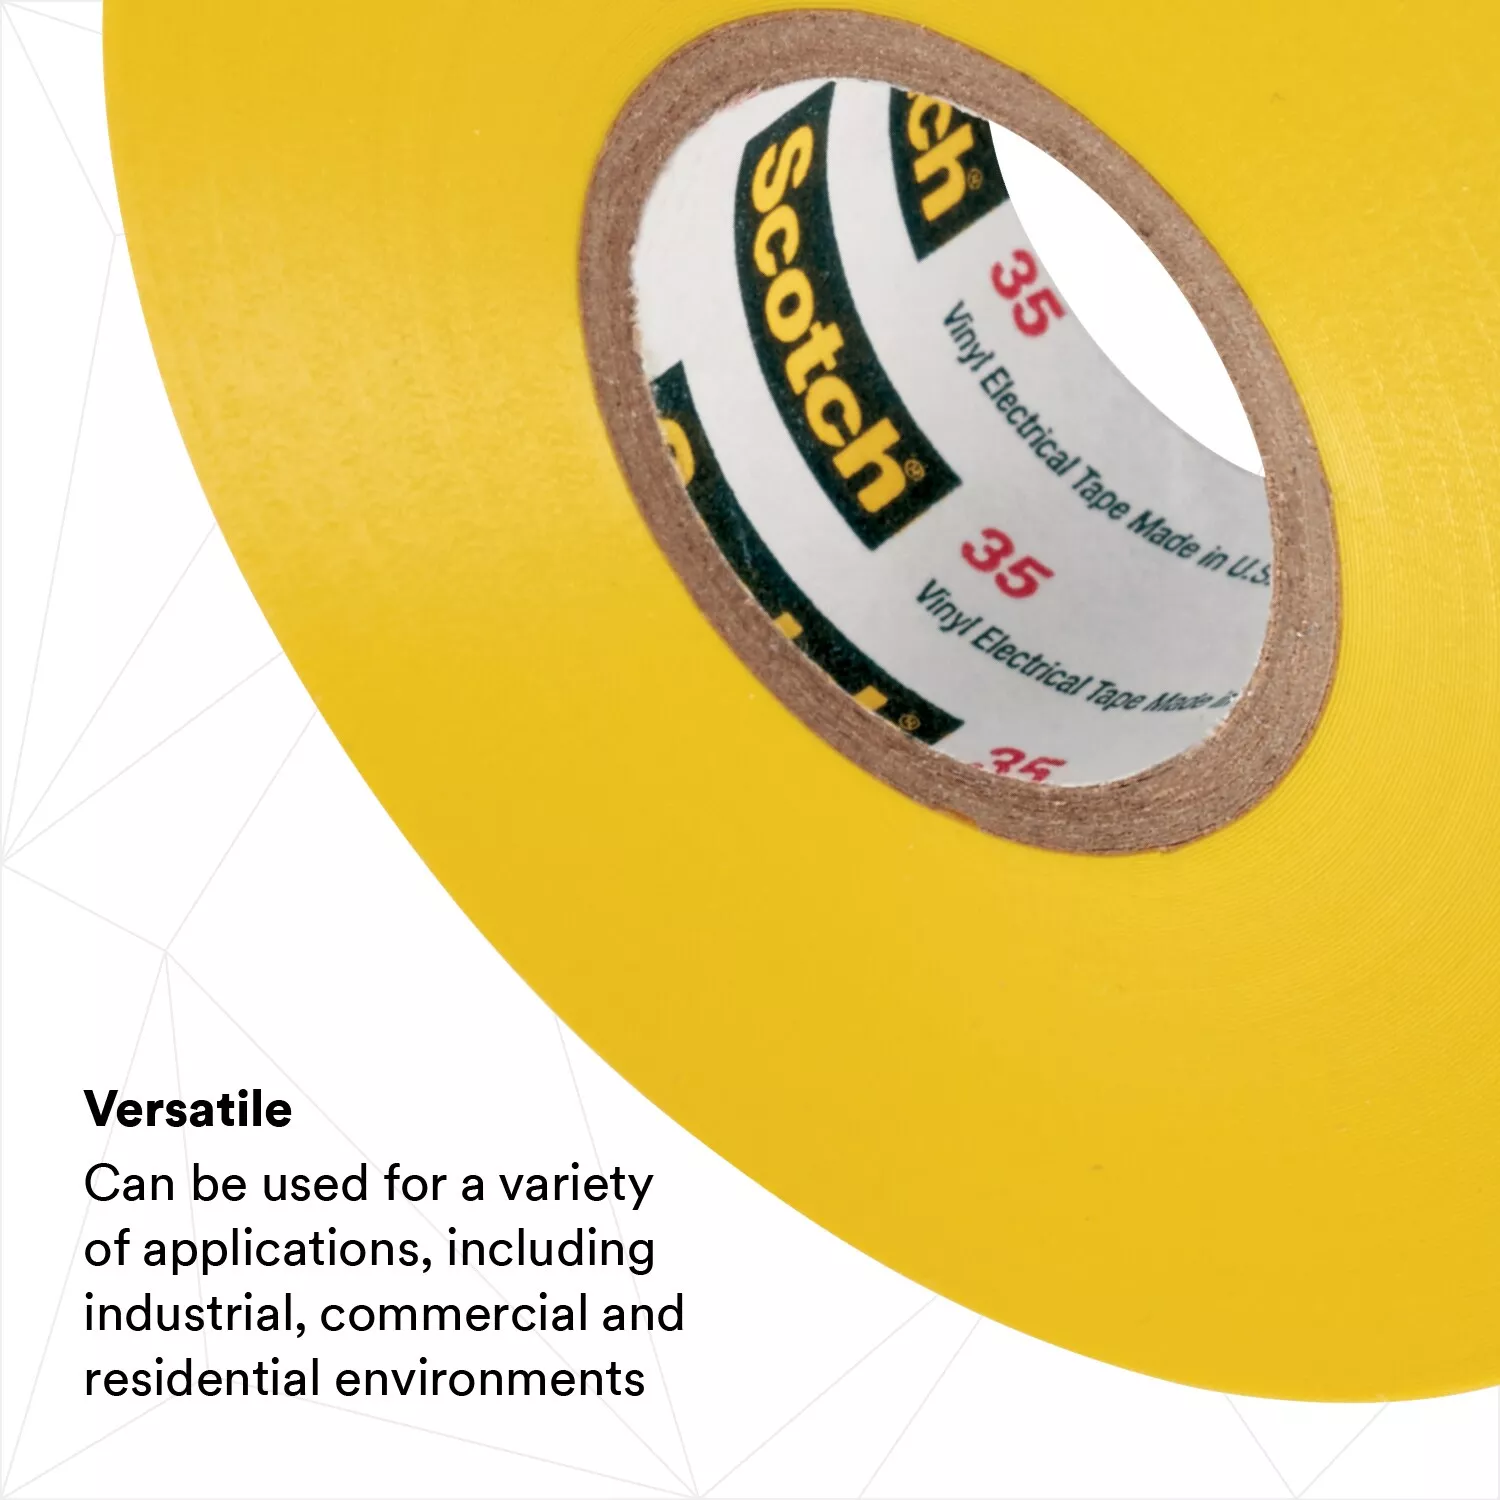 SKU 7000006096 | Scotch® Vinyl Color Coding Electrical Tape 35